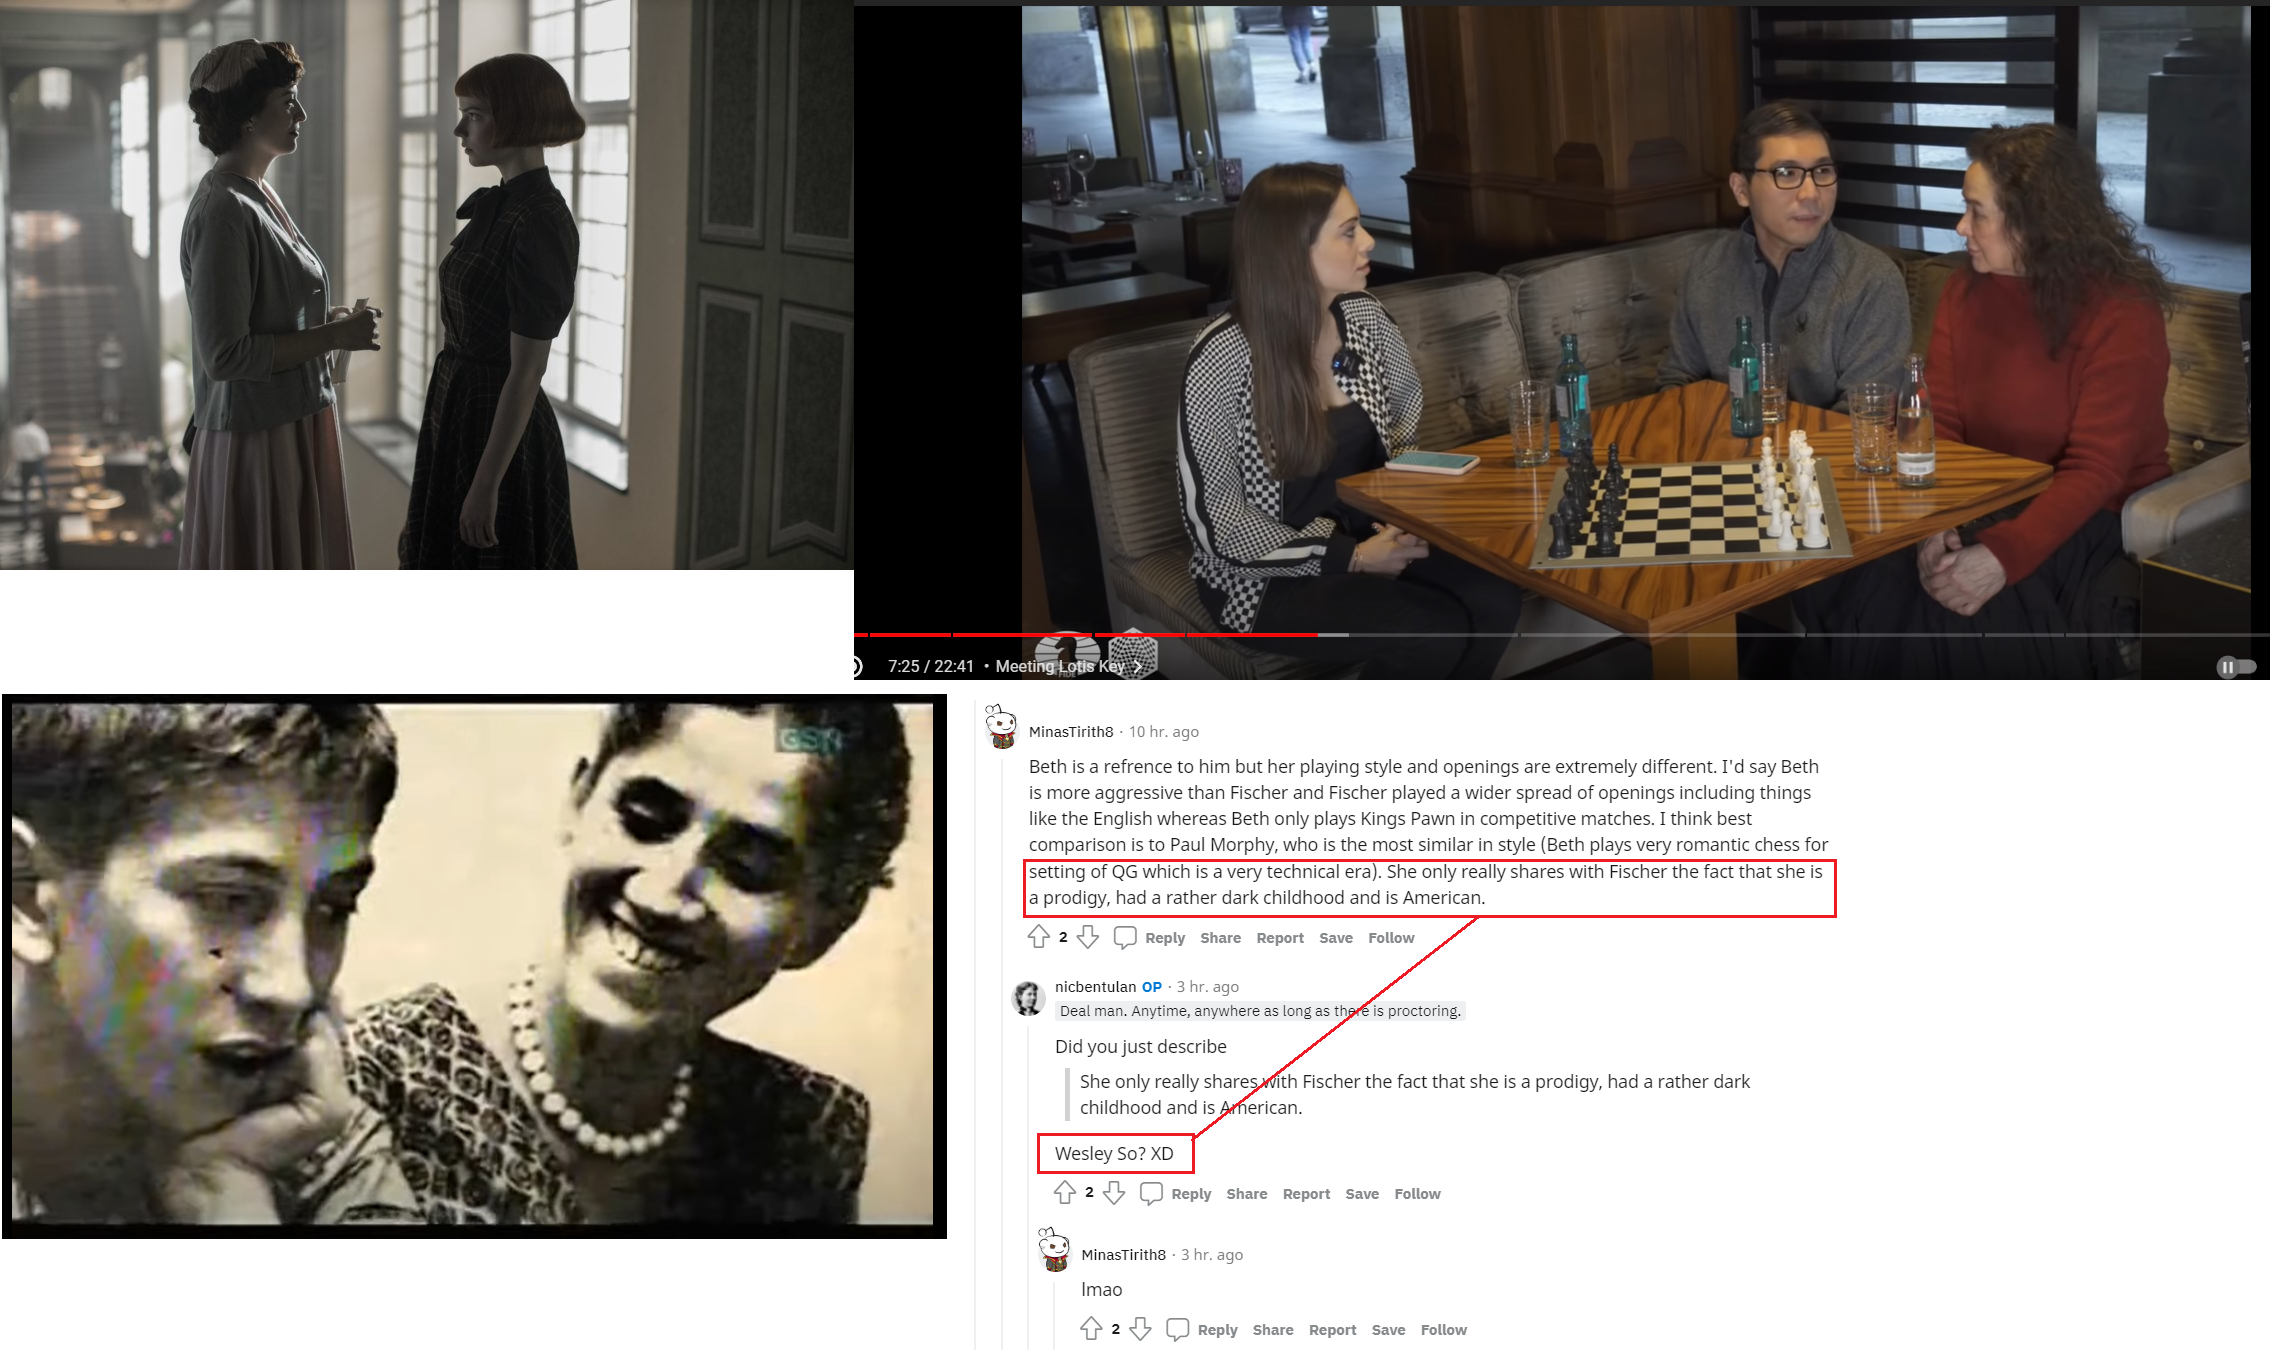 Dina Belenkaya on X: If I had known that the key to women's chess